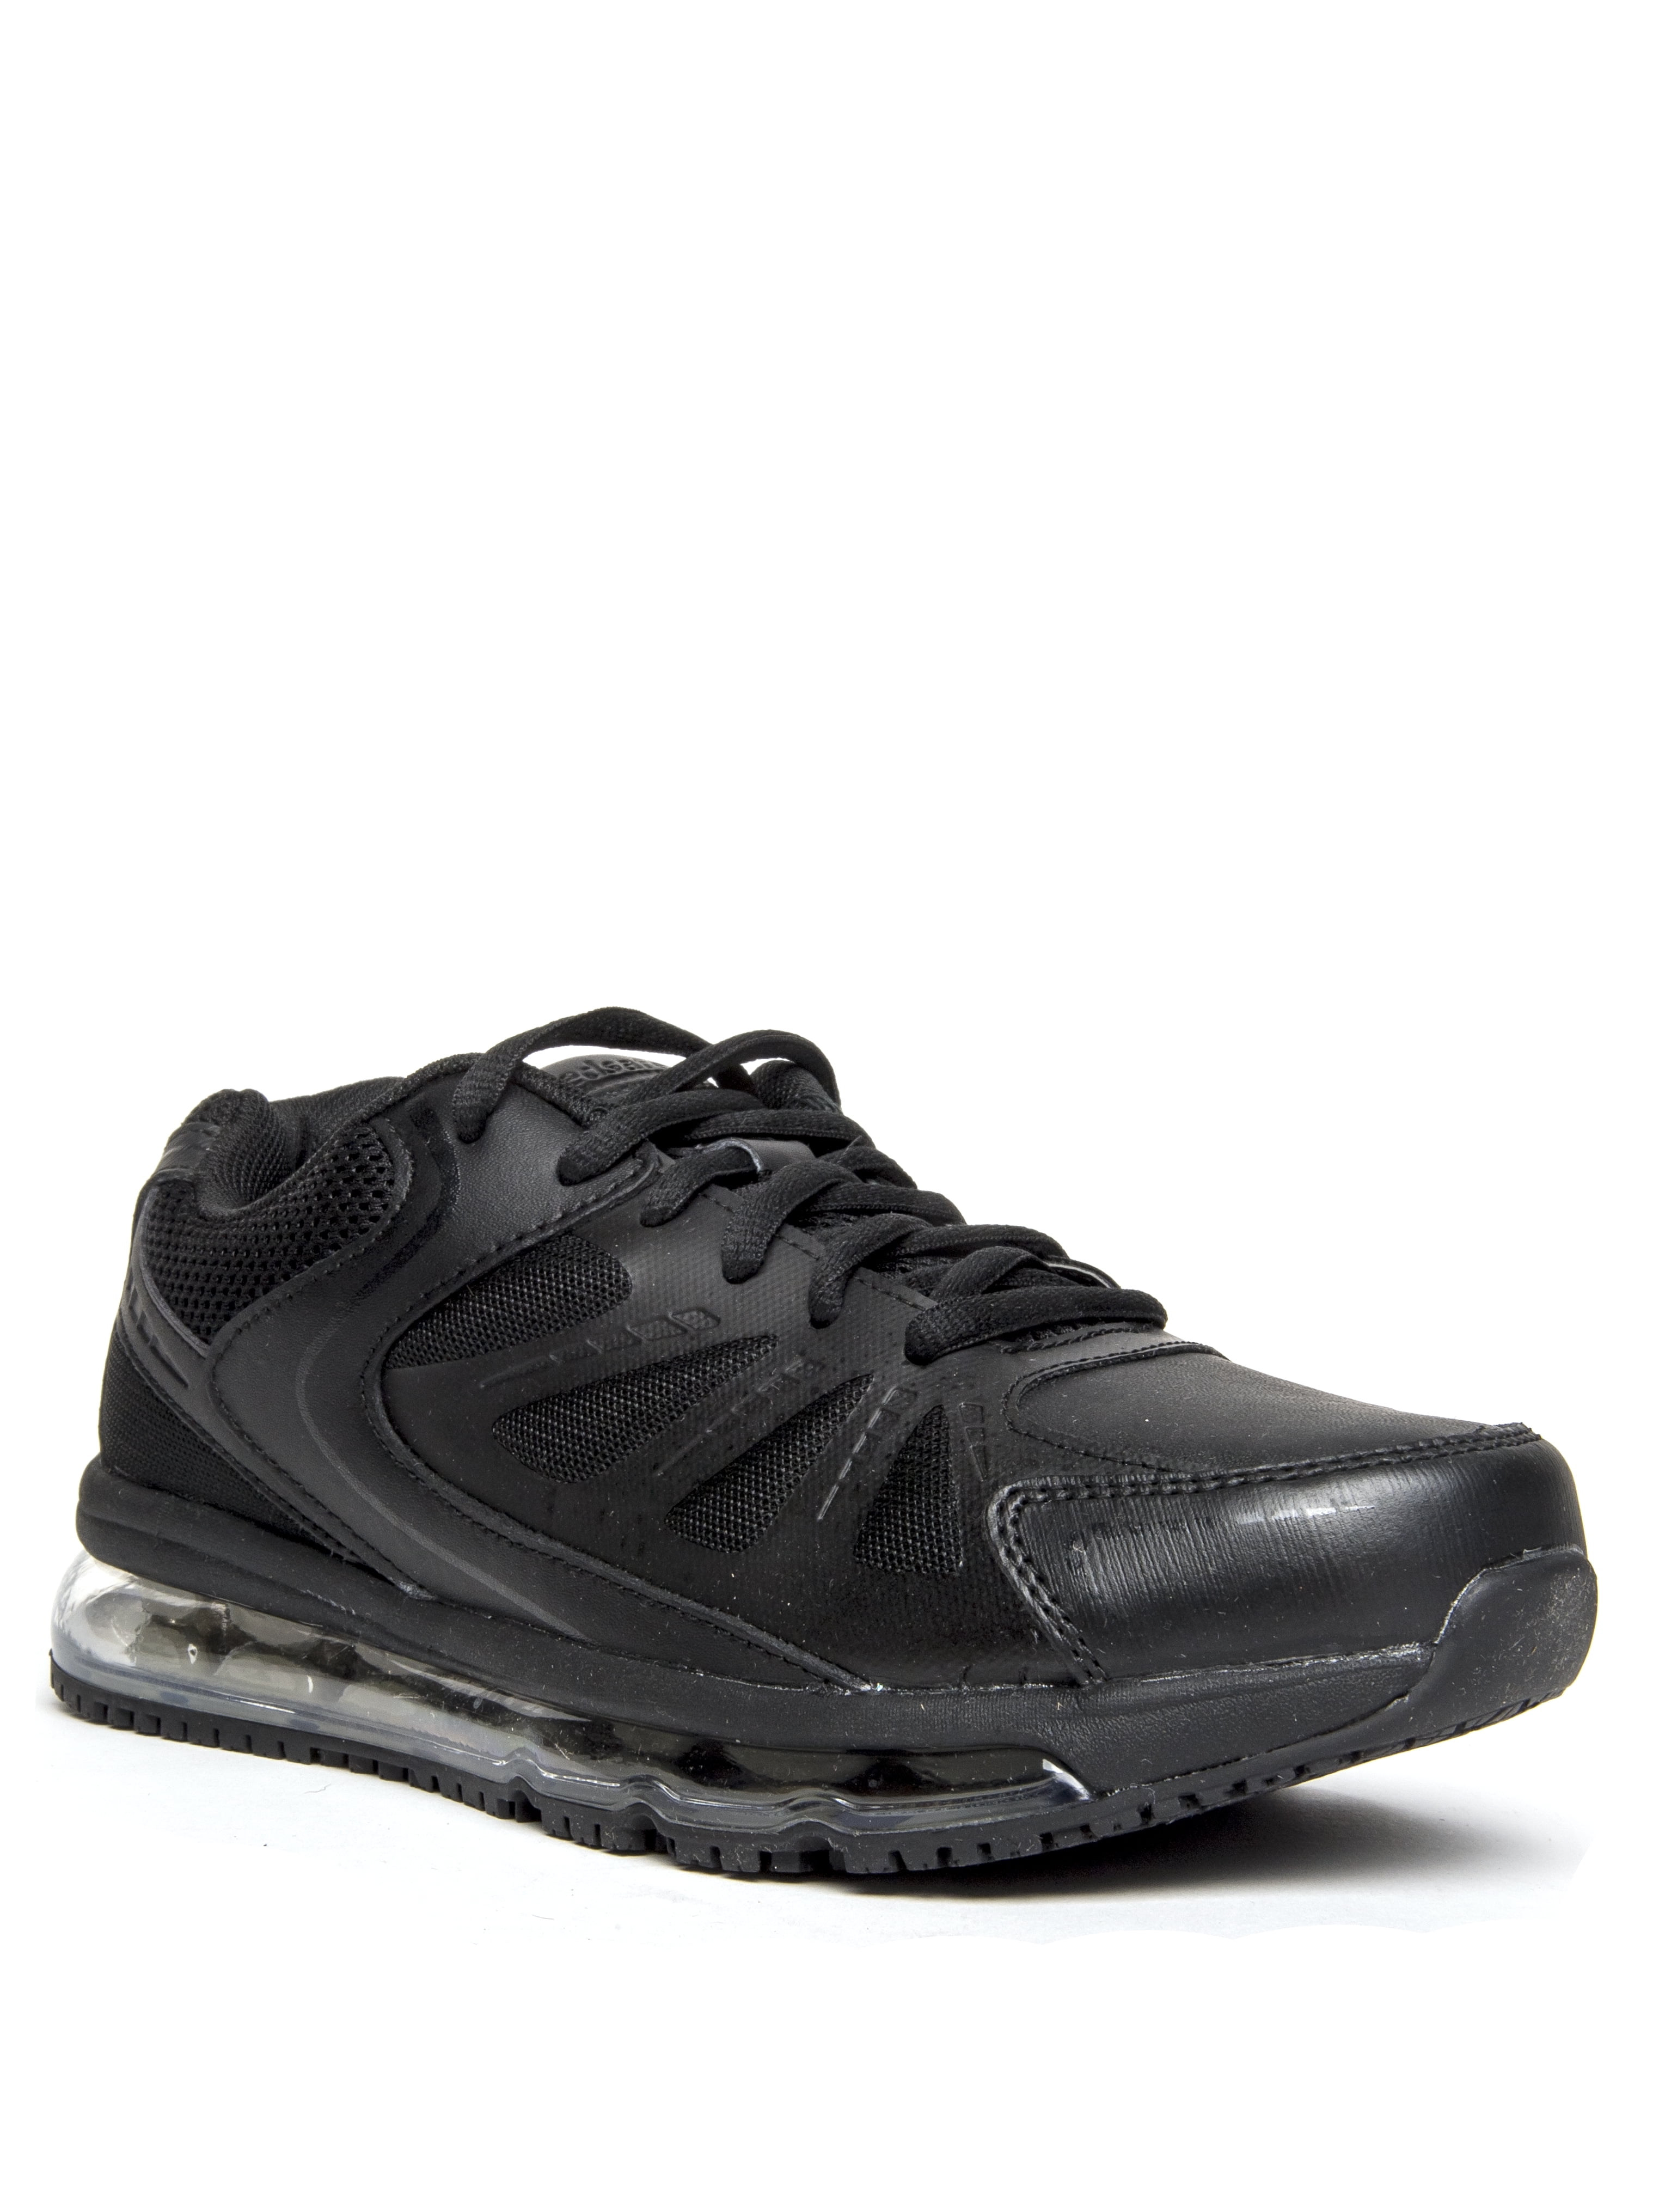 Tredsafe Tredsafe Trevor Men’s Slip Resistant Work Shoes